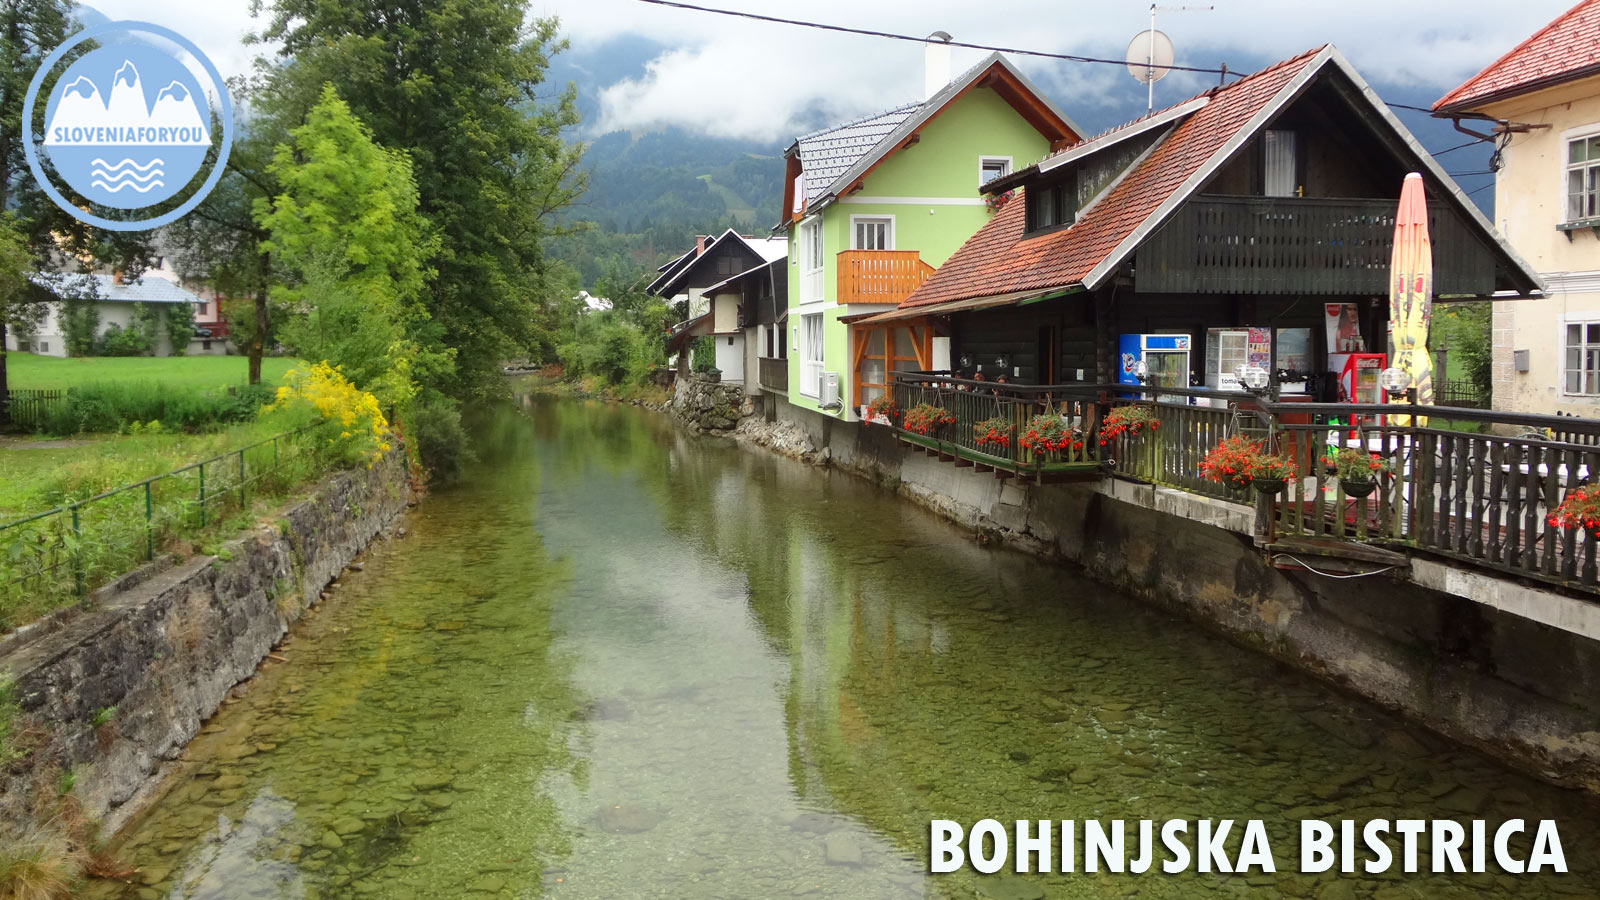 Bohinjska Bistrica_Sloveniaforyou